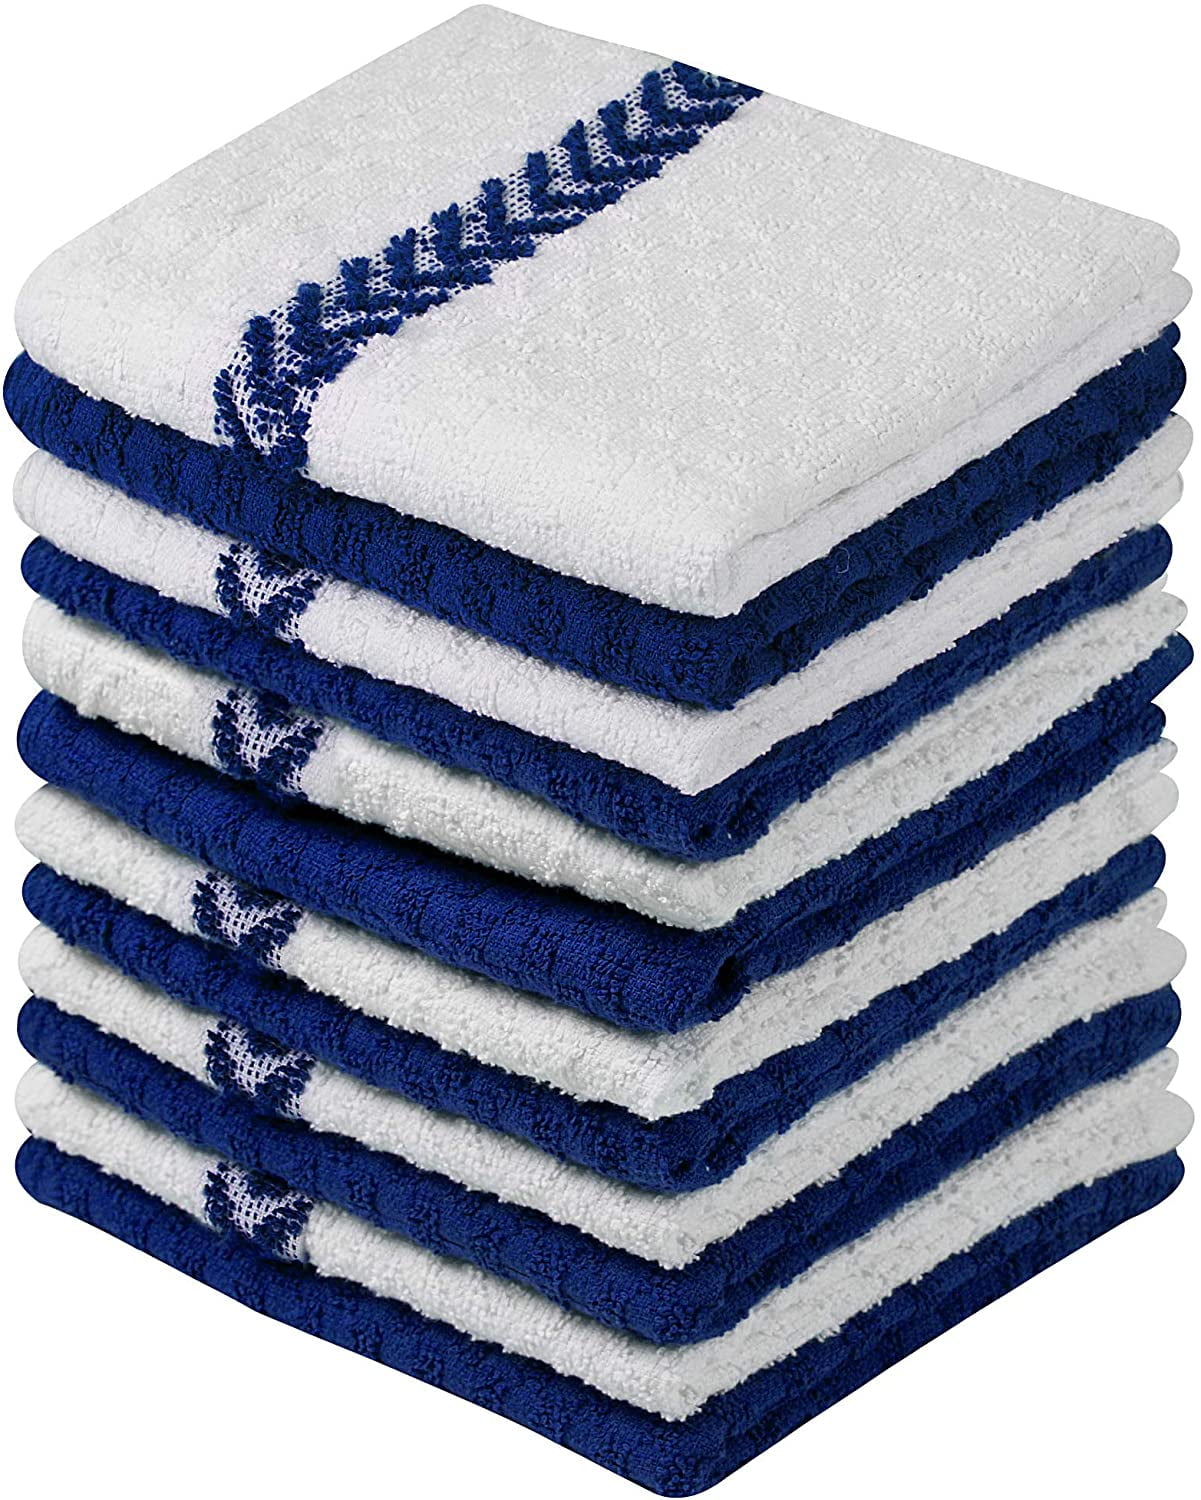 Beauty Threadz Kitchen Towels 15 X 25 Inches 100 Ring Spun Cotton Super Soft Absorbent Dish Tea Towels Bar Blue Arrow Stripe Pack 12 1c0ea944 0b58 4400 Ad6f 39316323100e.eaeb18dfad424c05966c497e005d0b7d 